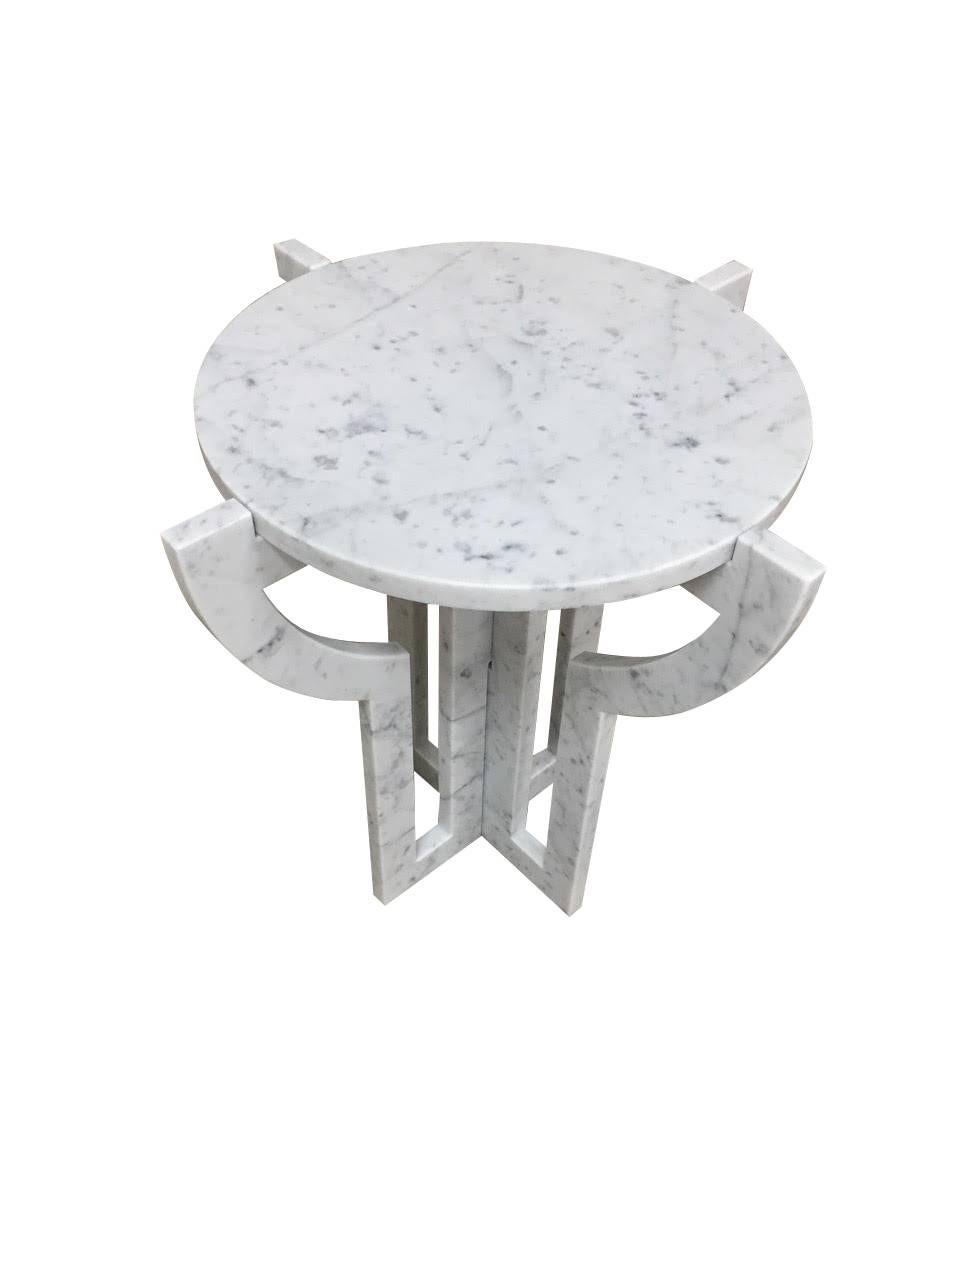 Italian White Carrara Marble Cocktail Table, Italy, Contemporary